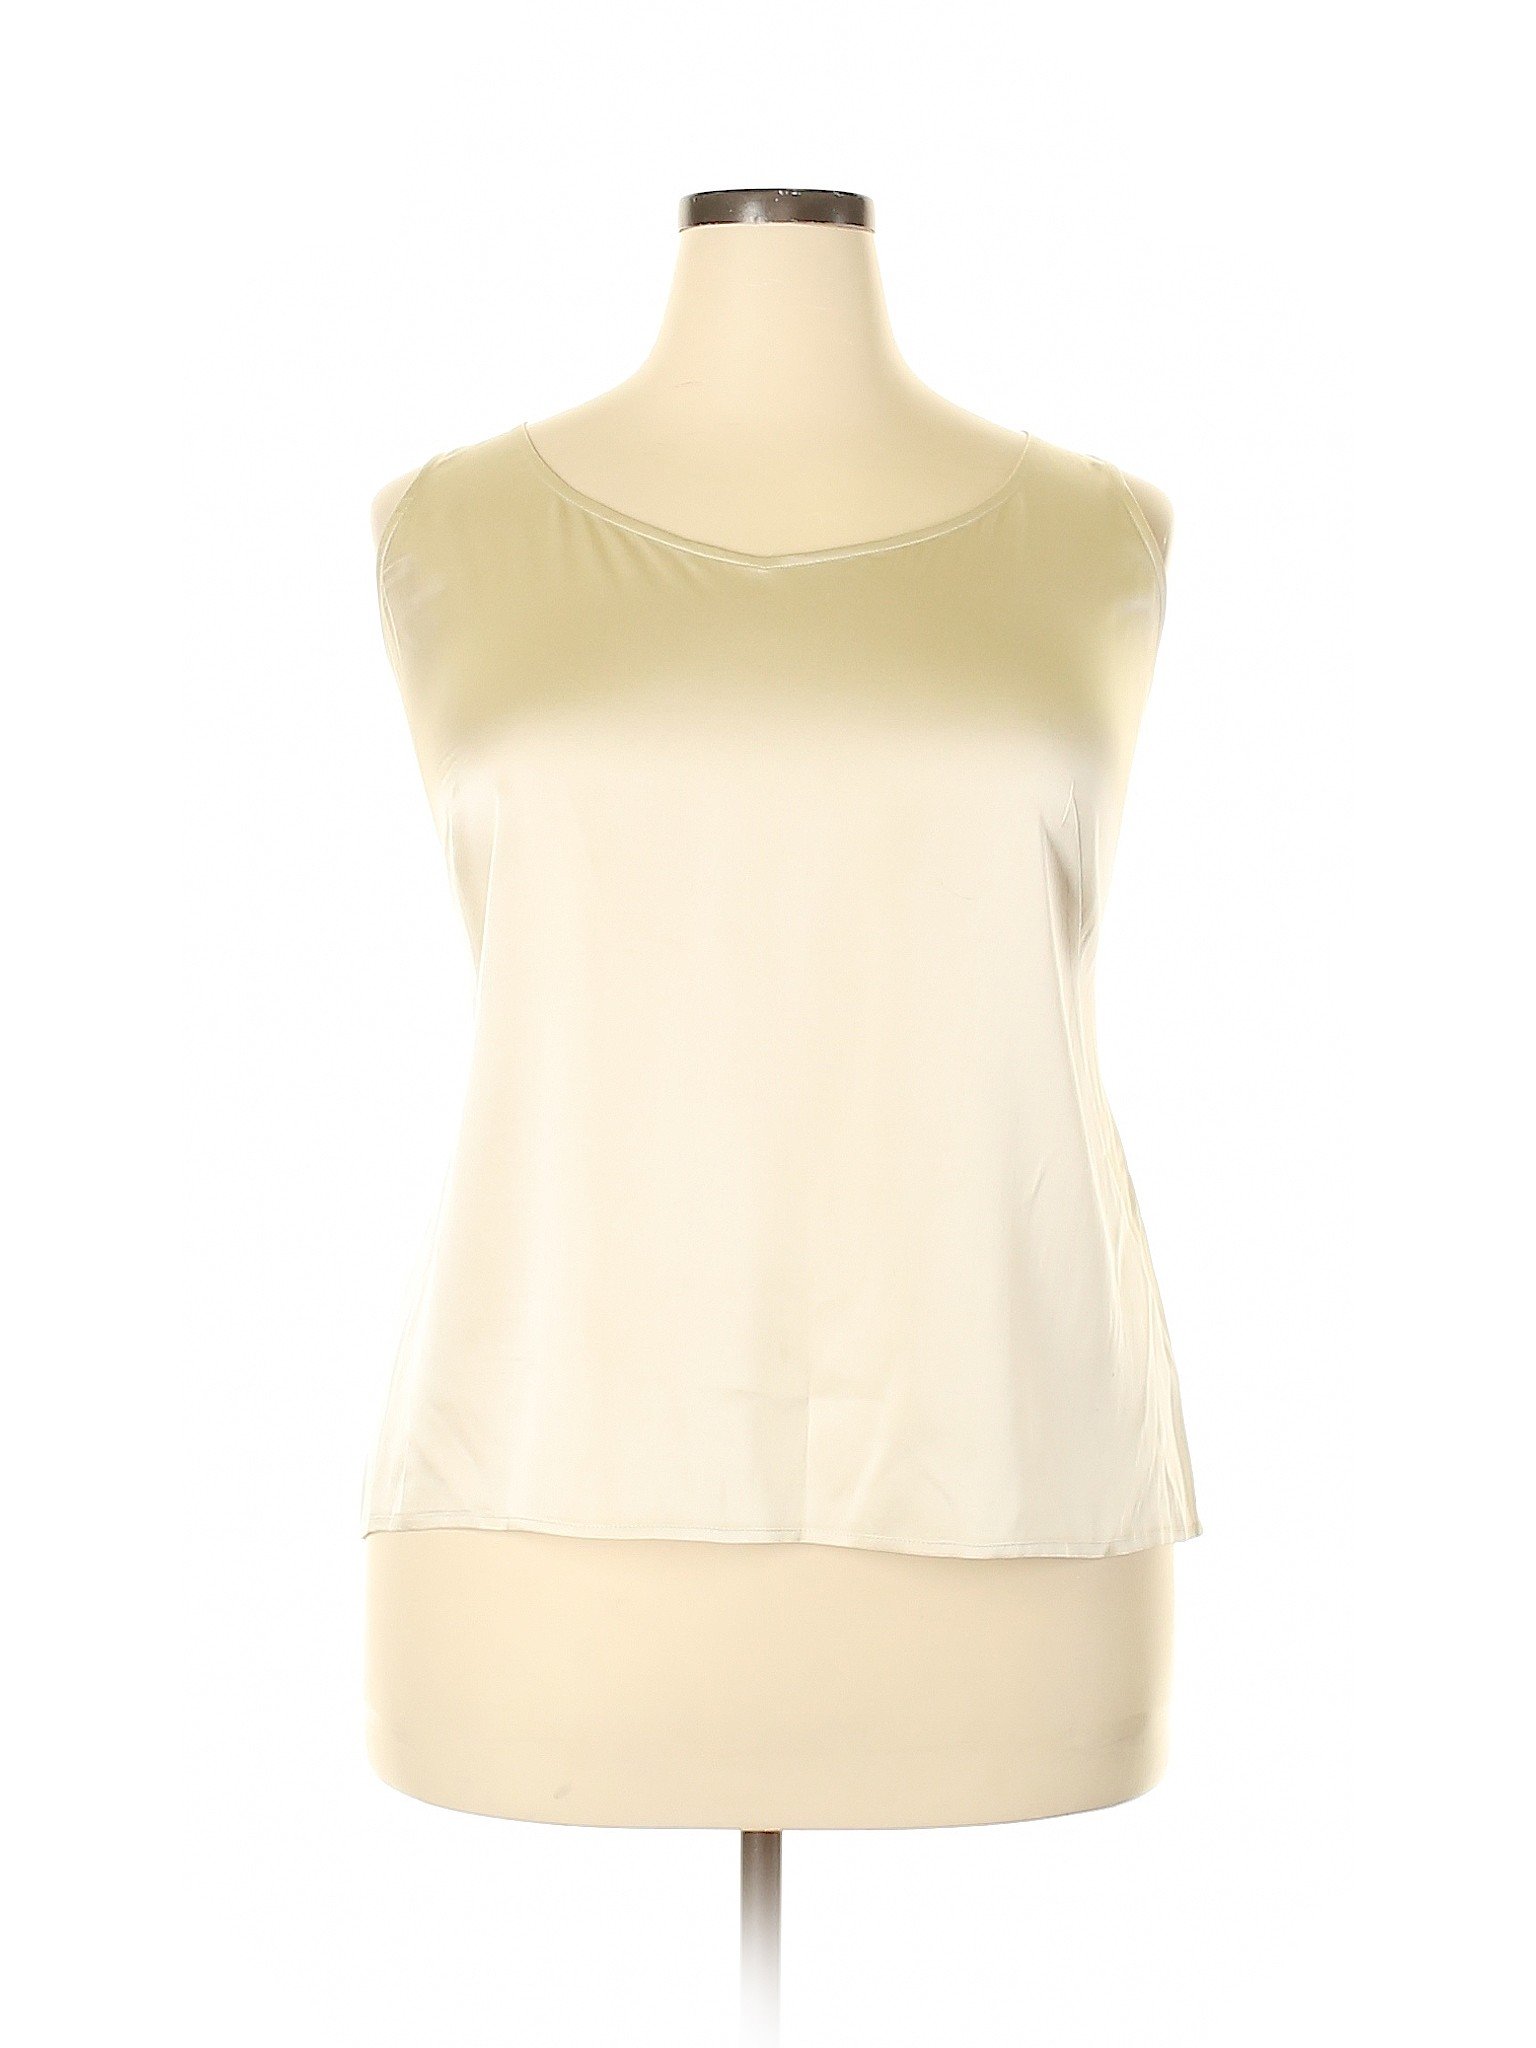 Eileen Fisher Tan Sleeveless Silk Top Size 3X (Plus) - 78% off | thredUP